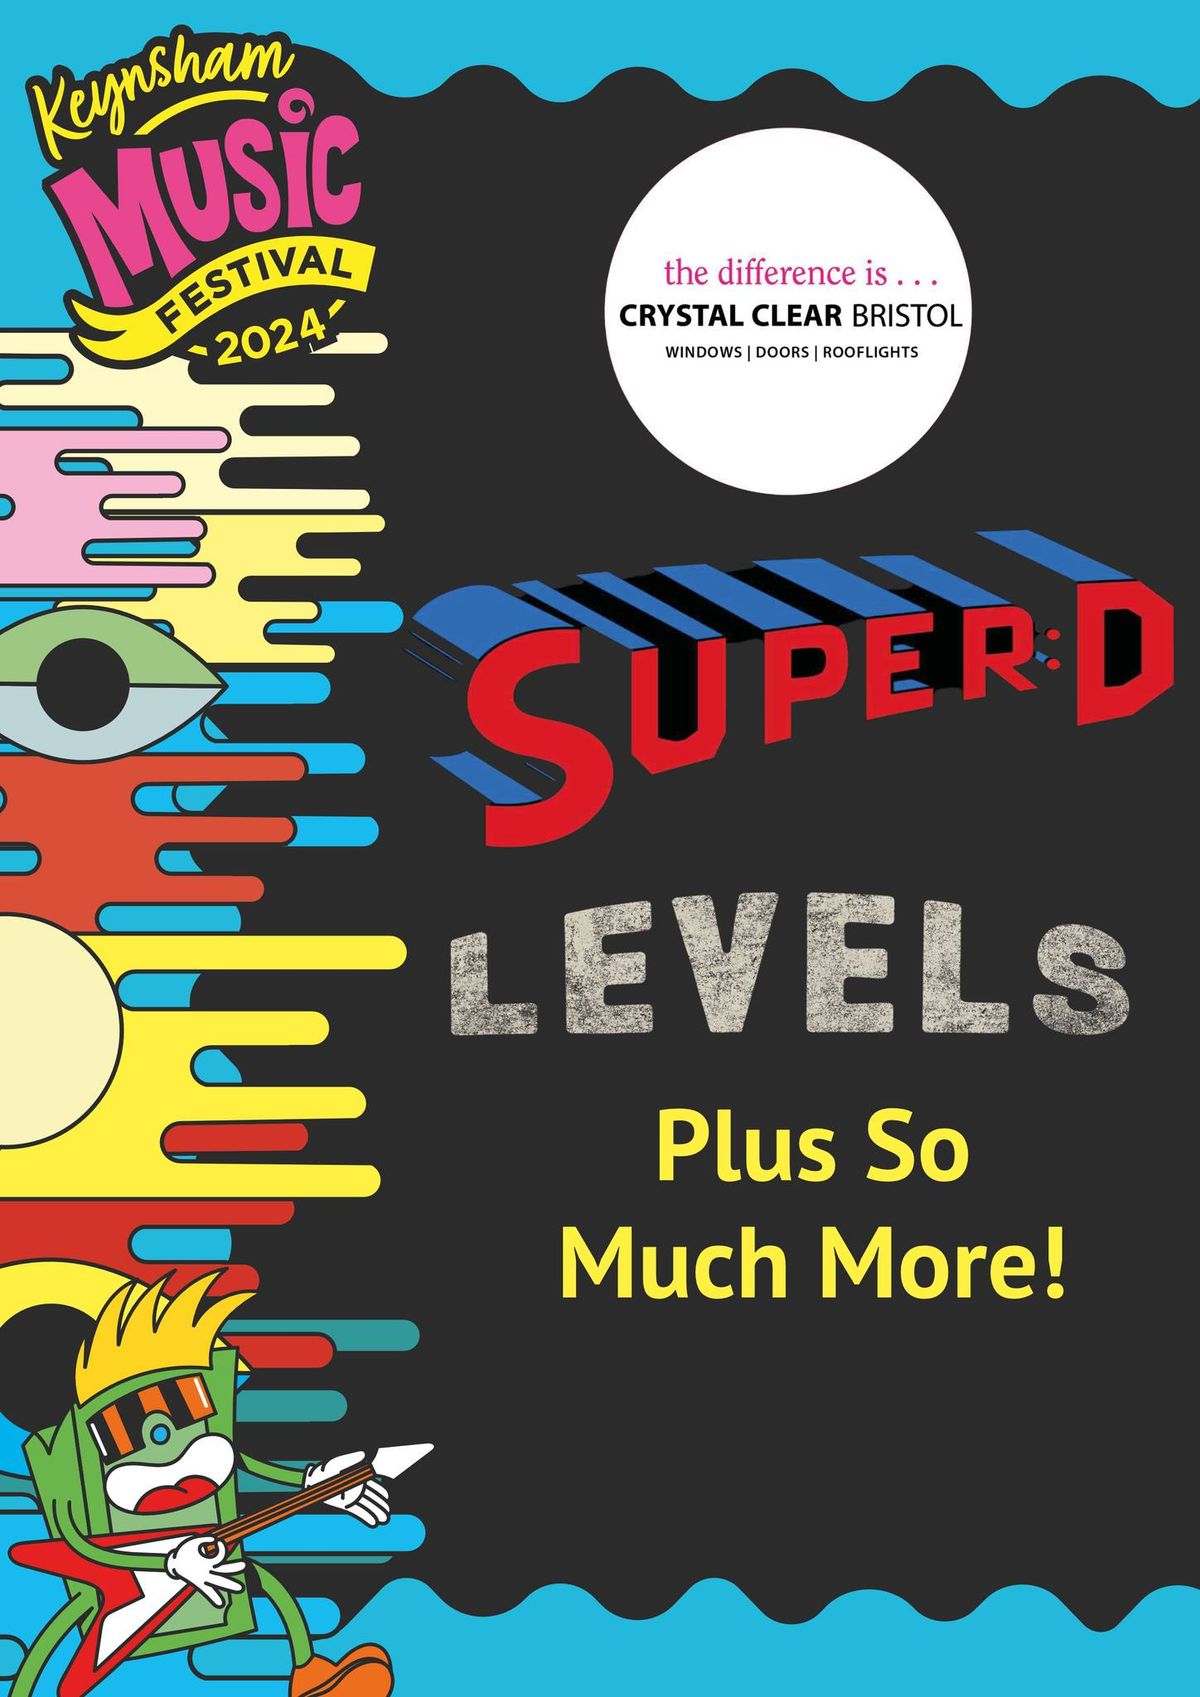 Keynsham Music Festival Presents: Super : D